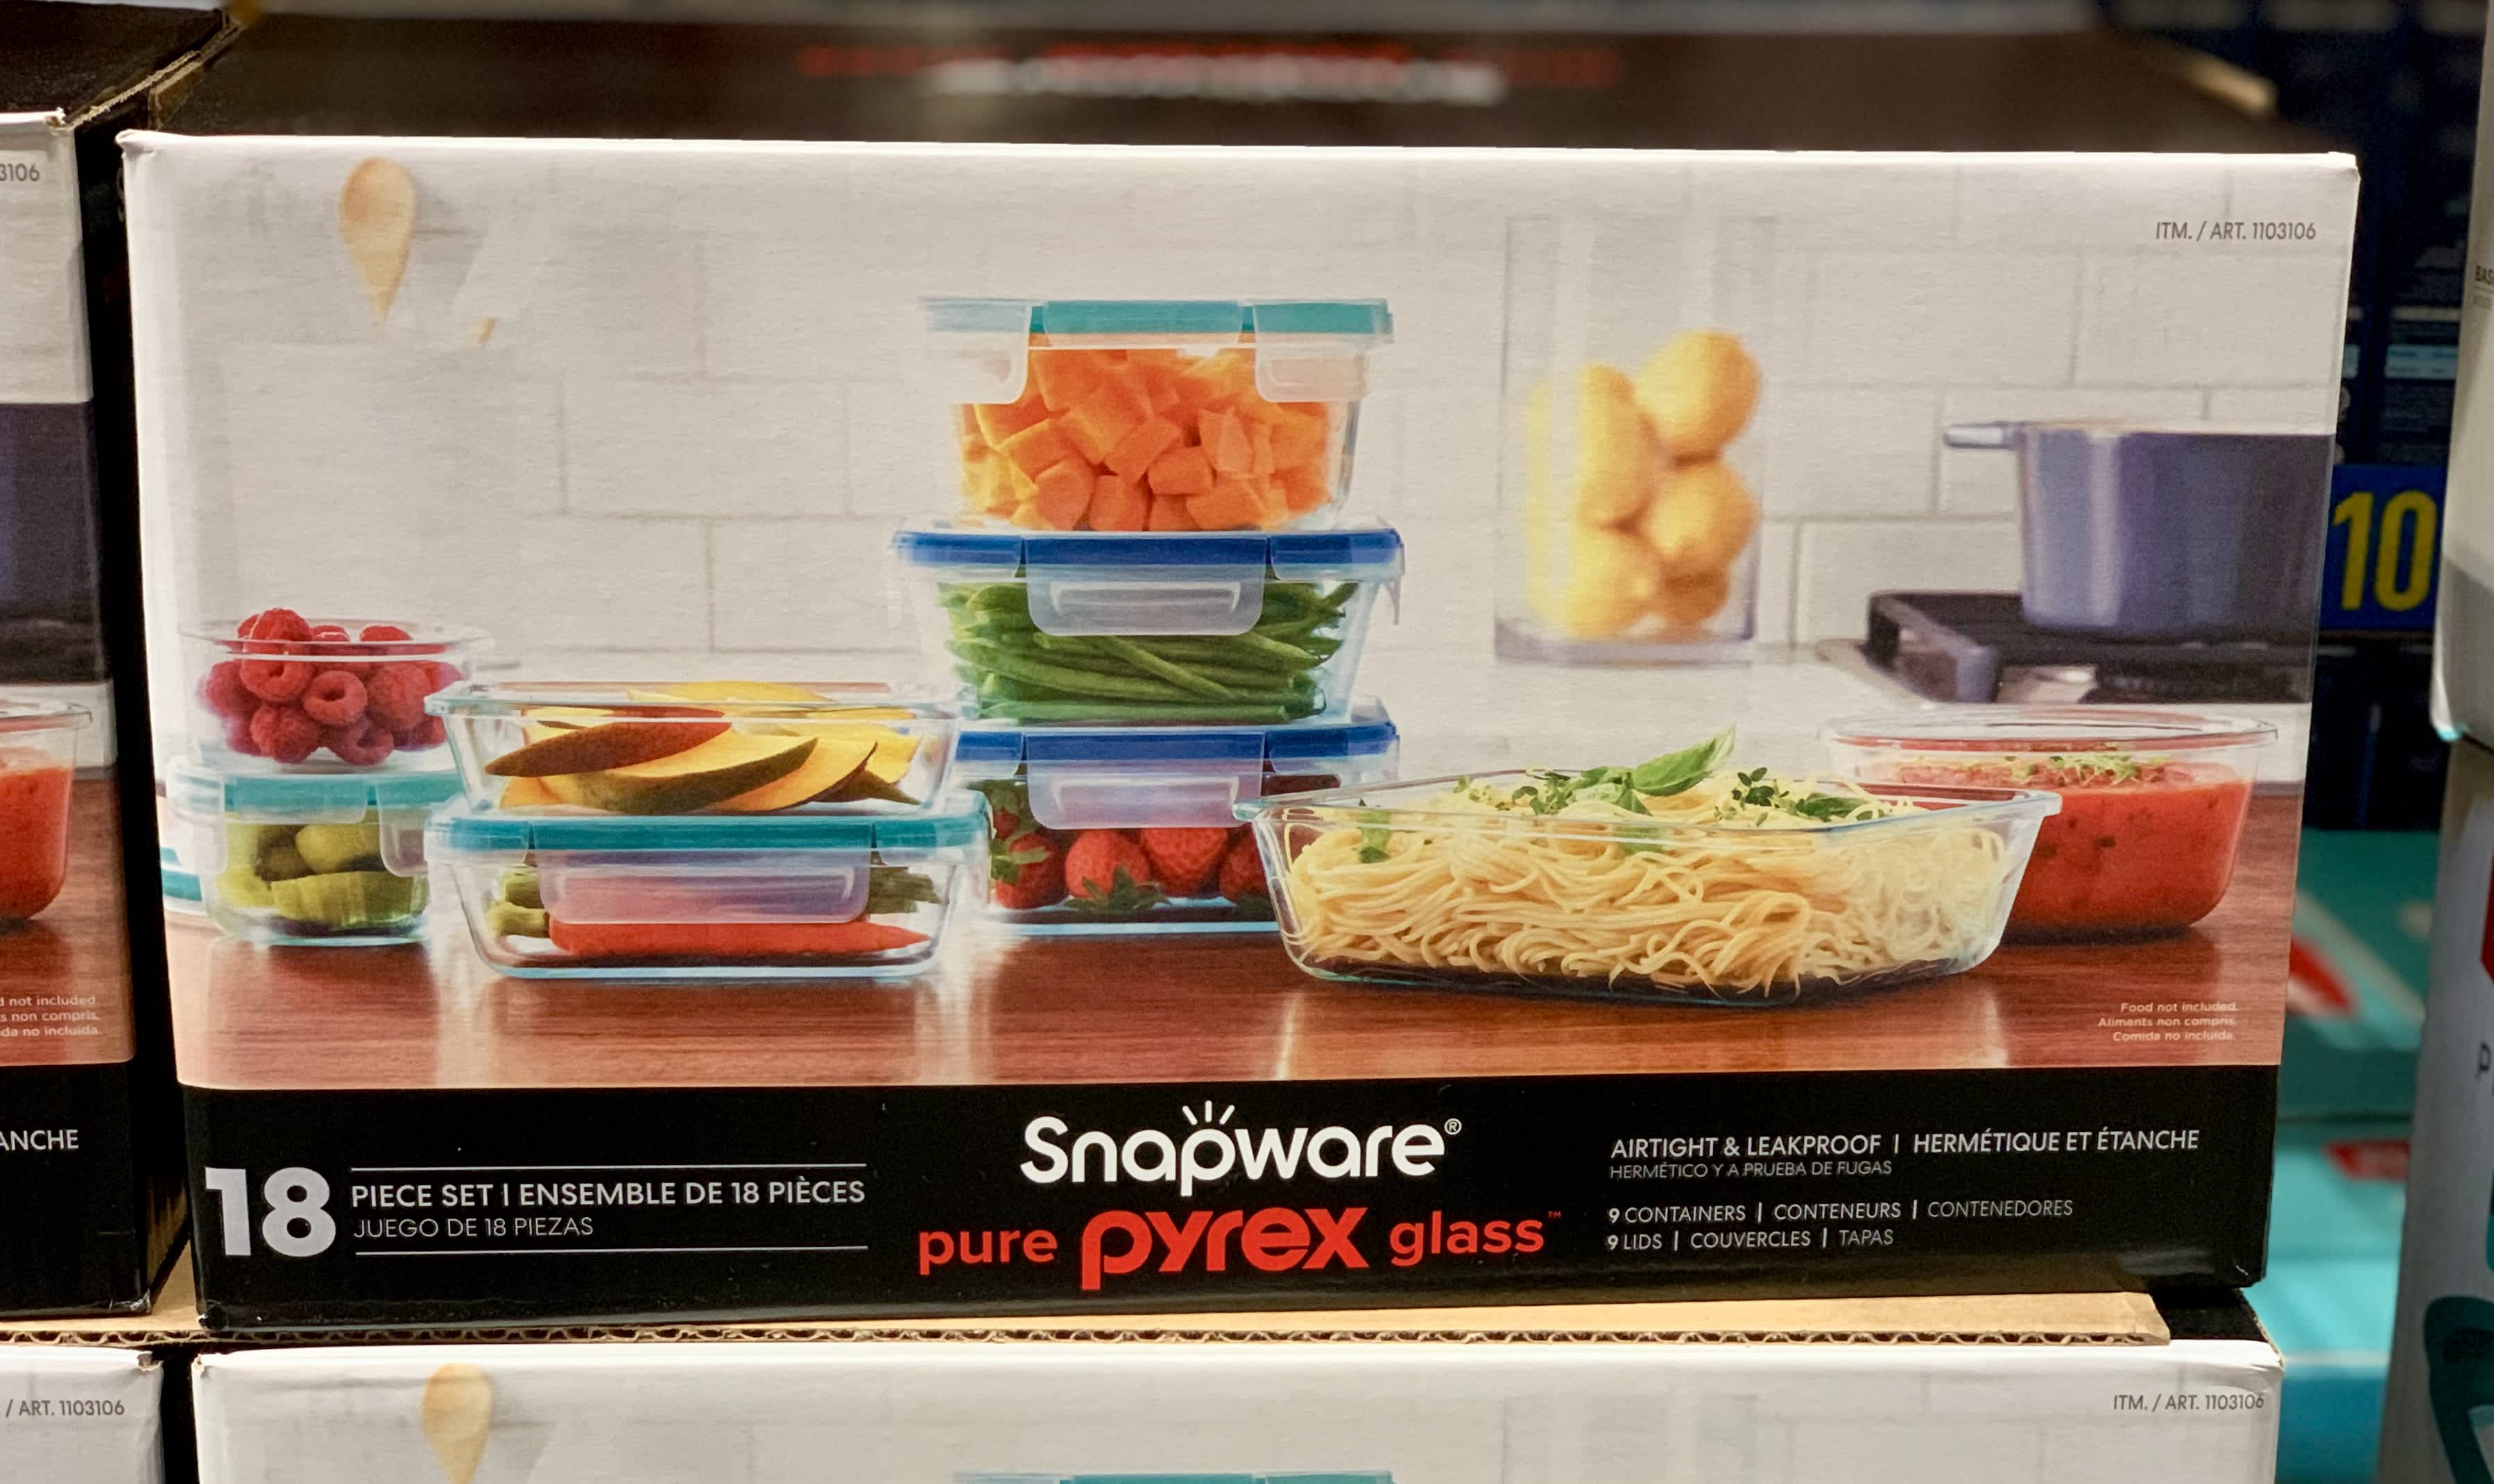 Costco Finds: $15.99 Snapware 38-Piece Plastic Food Storage Set